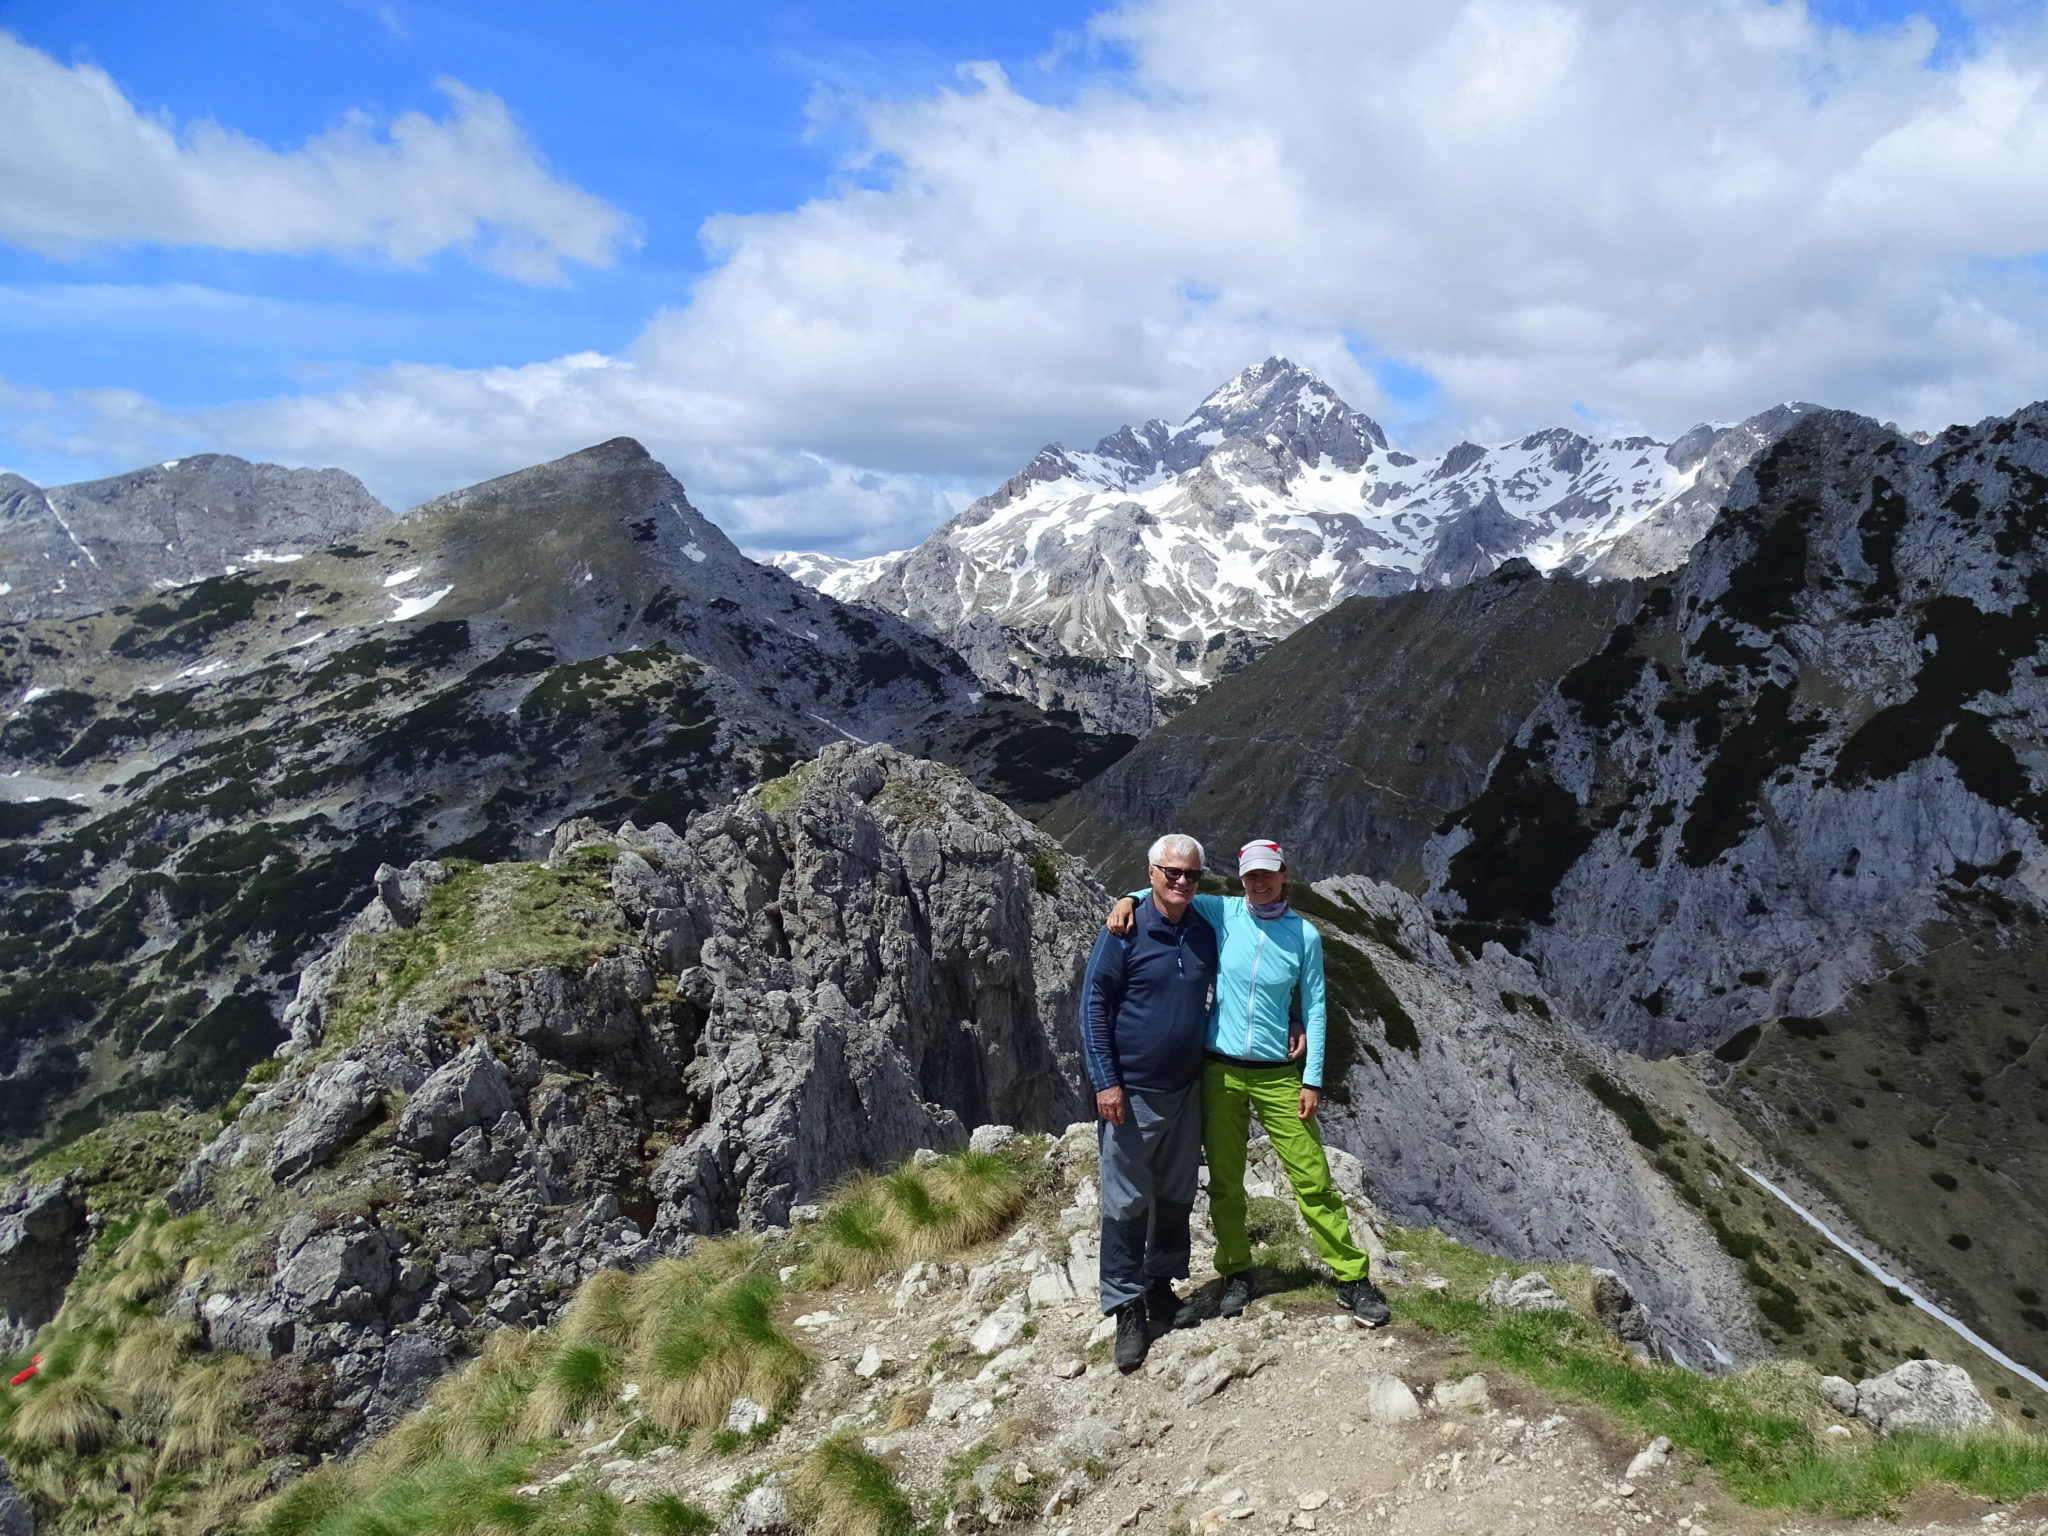 Hiking to Mt. Viševnik with my dad